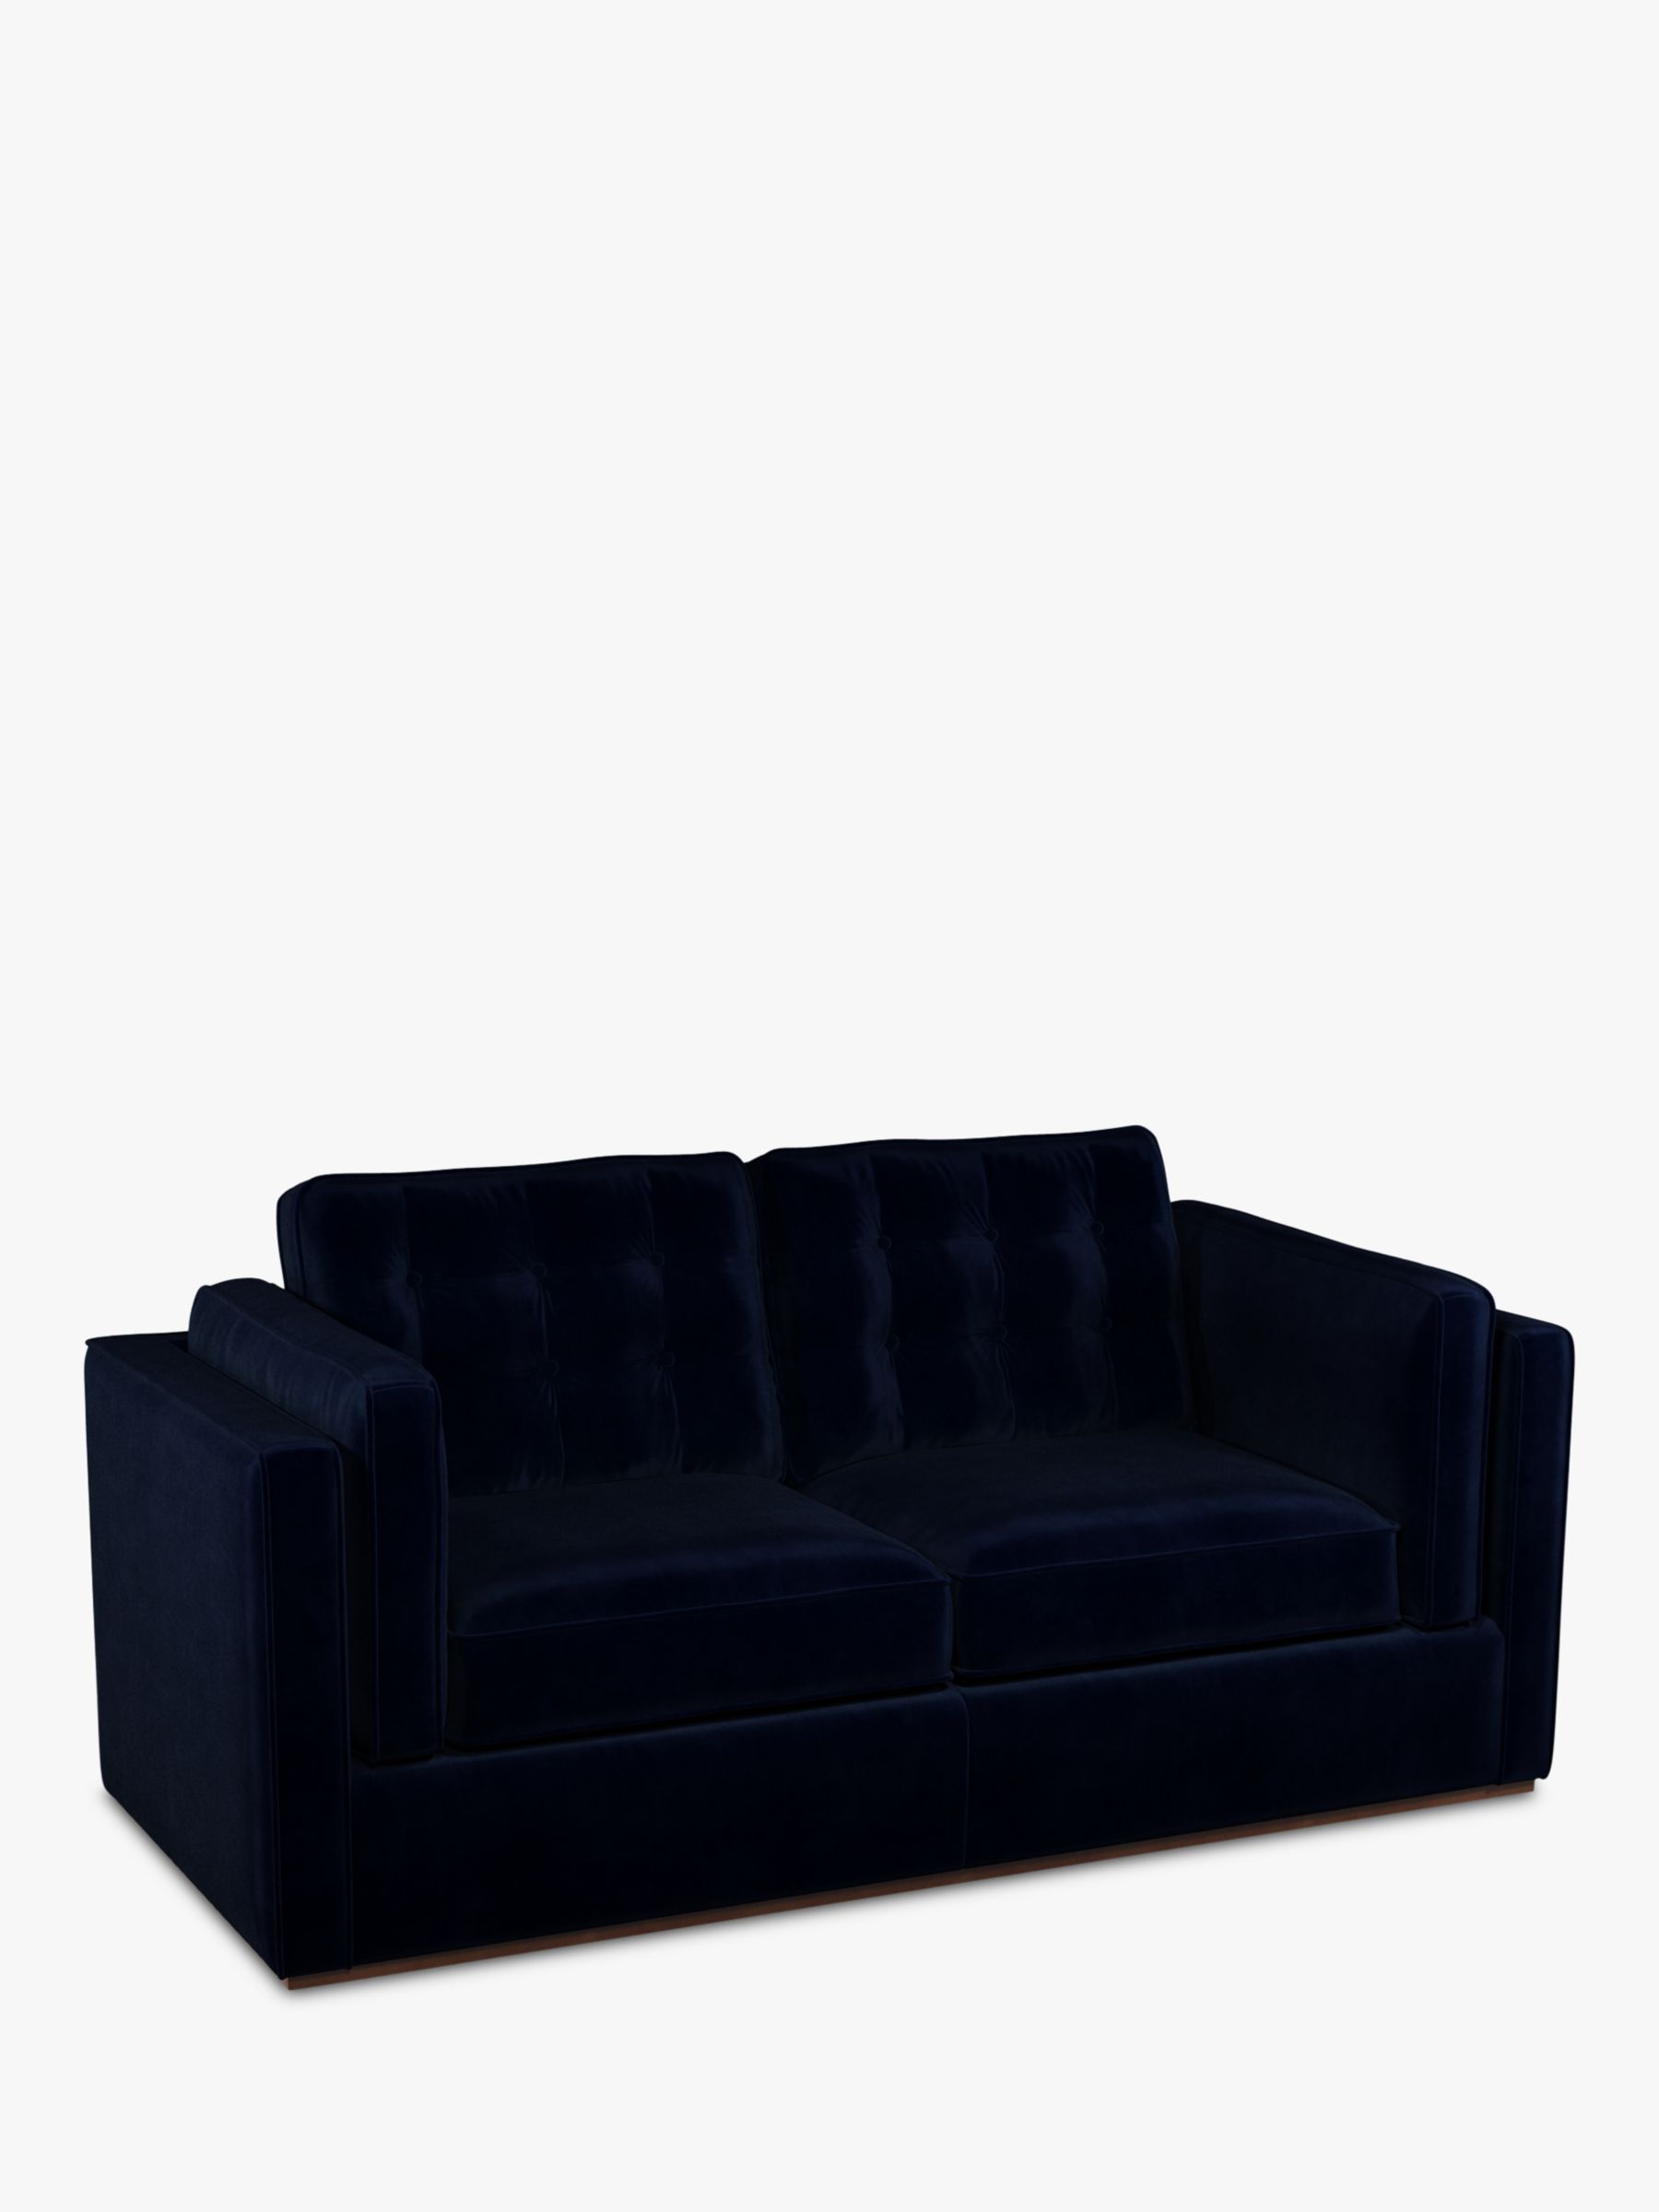 Lyon Range, John Lewis + Swoon Lyon Medium 2 Seater Sofa Bed, Caspian Blue Velvet